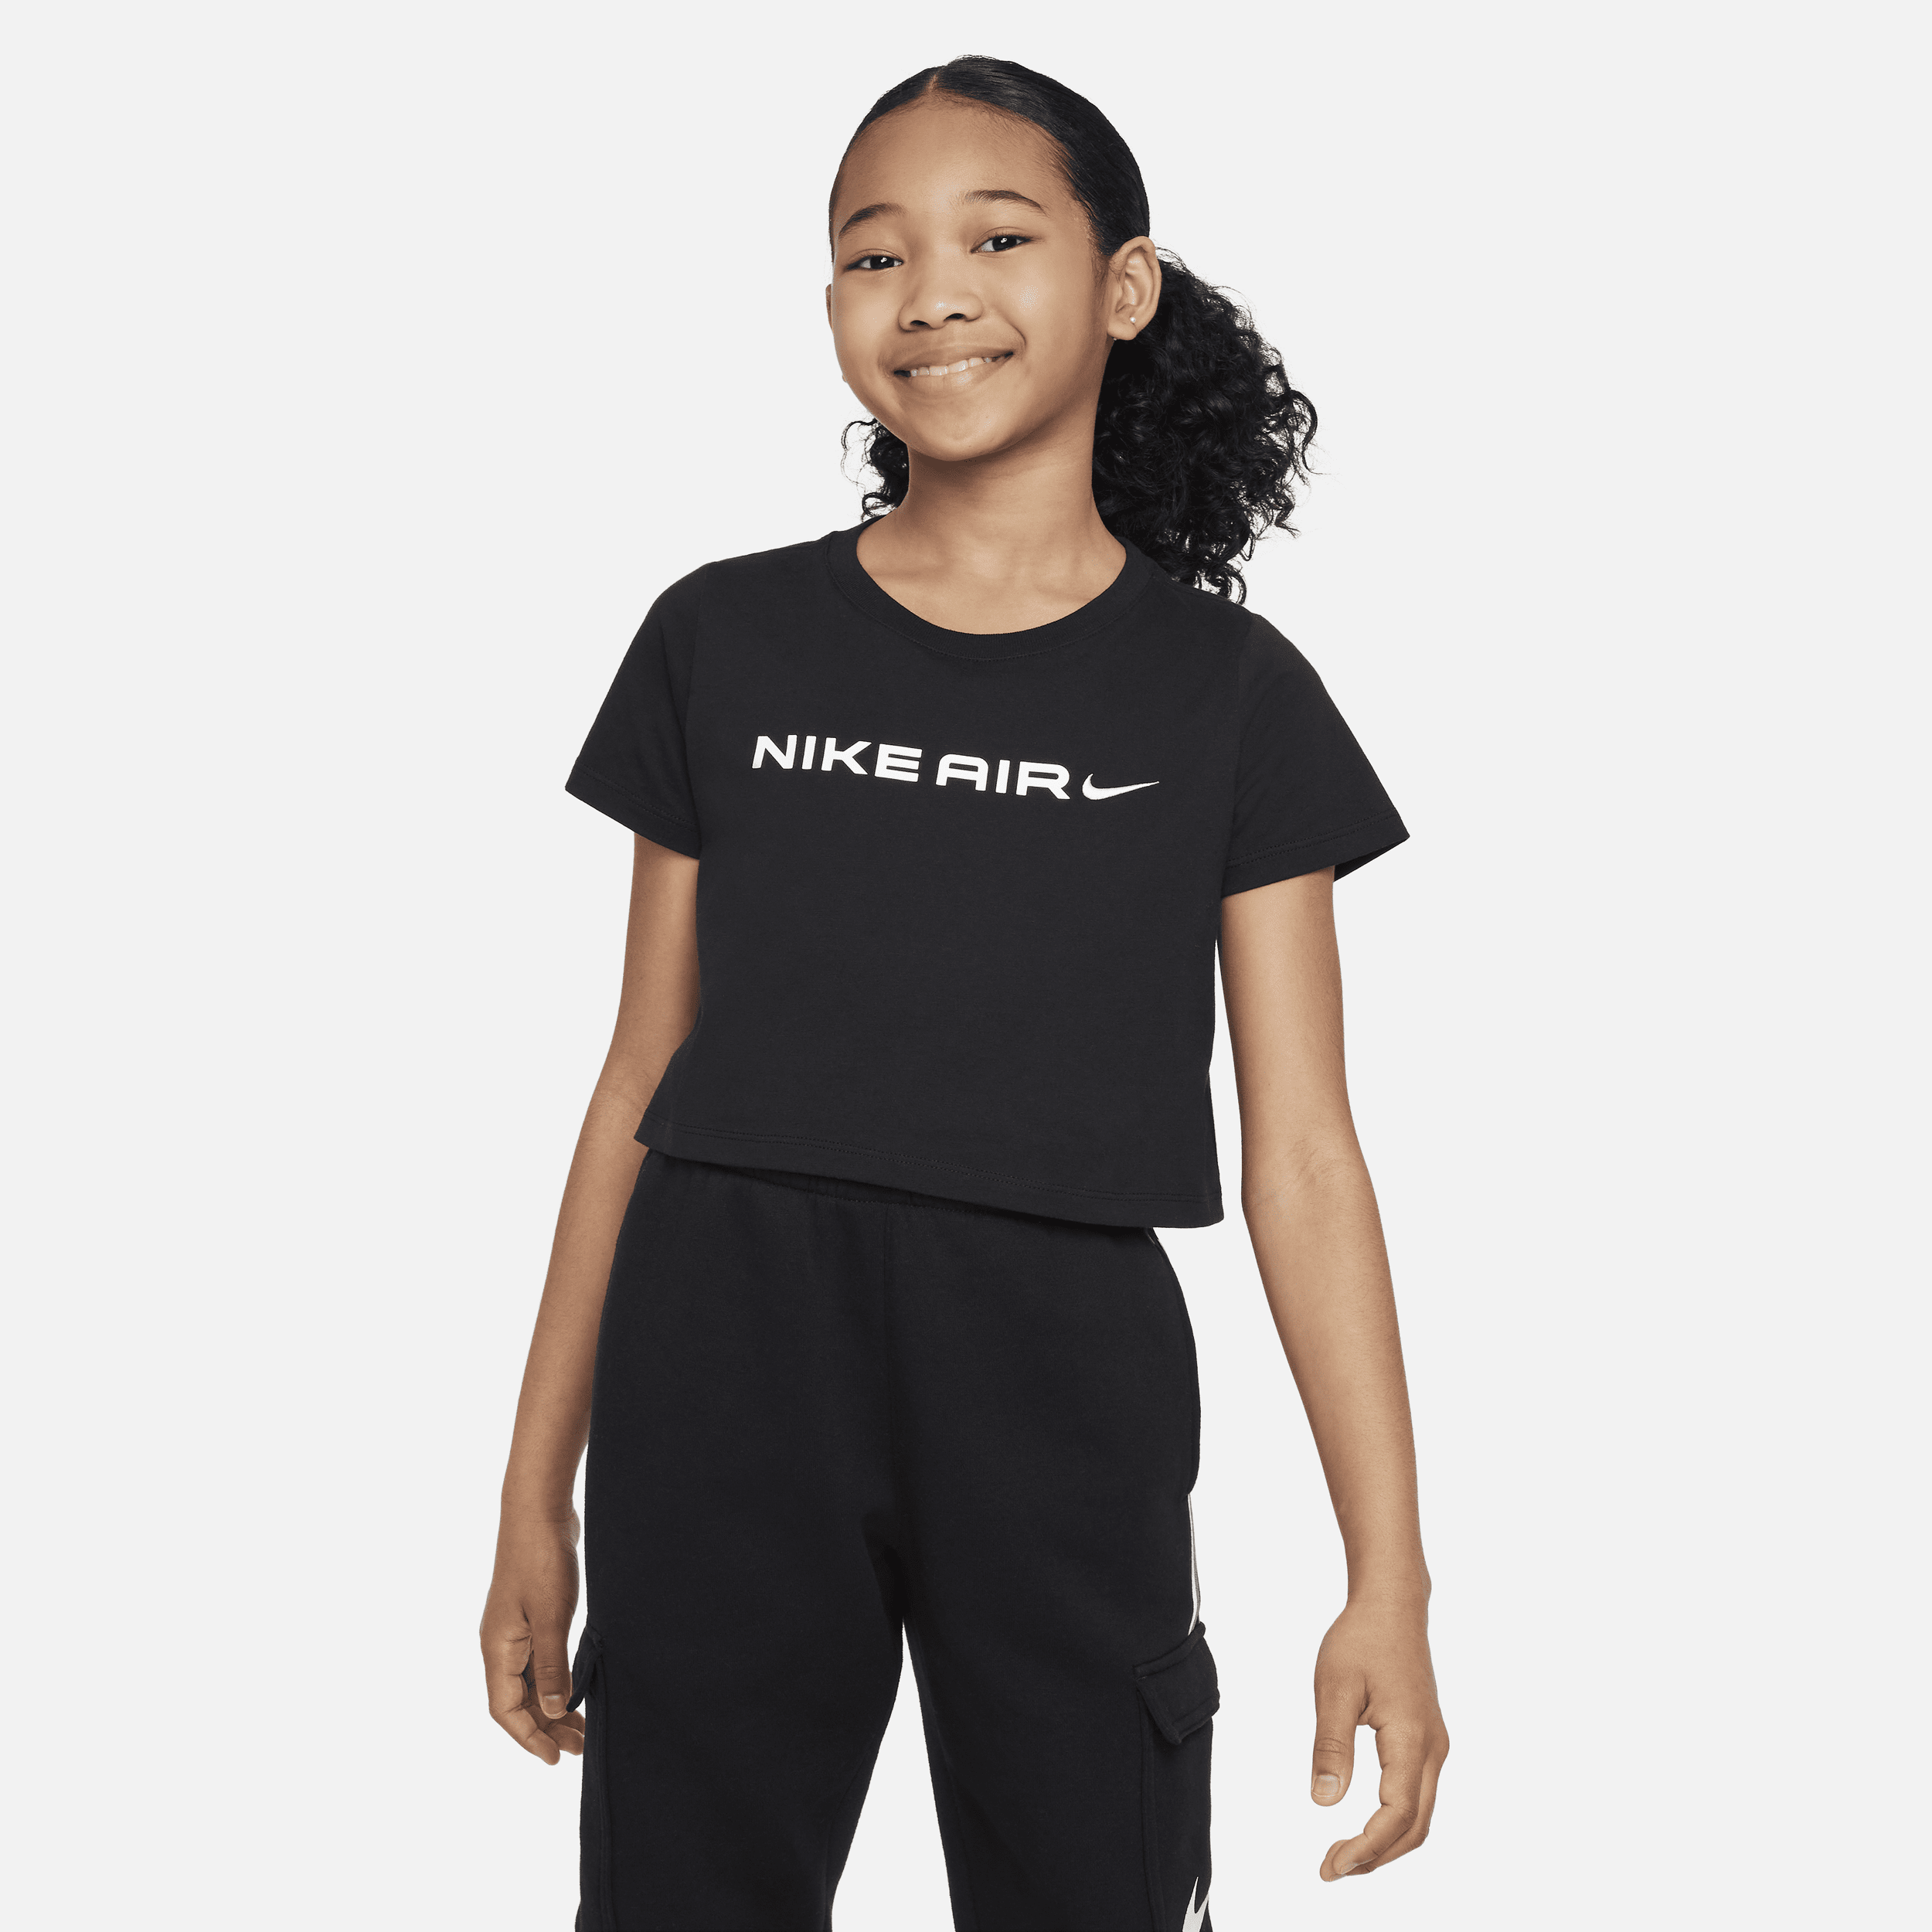 Nike Air T-shirt voor meisjes - Zwart